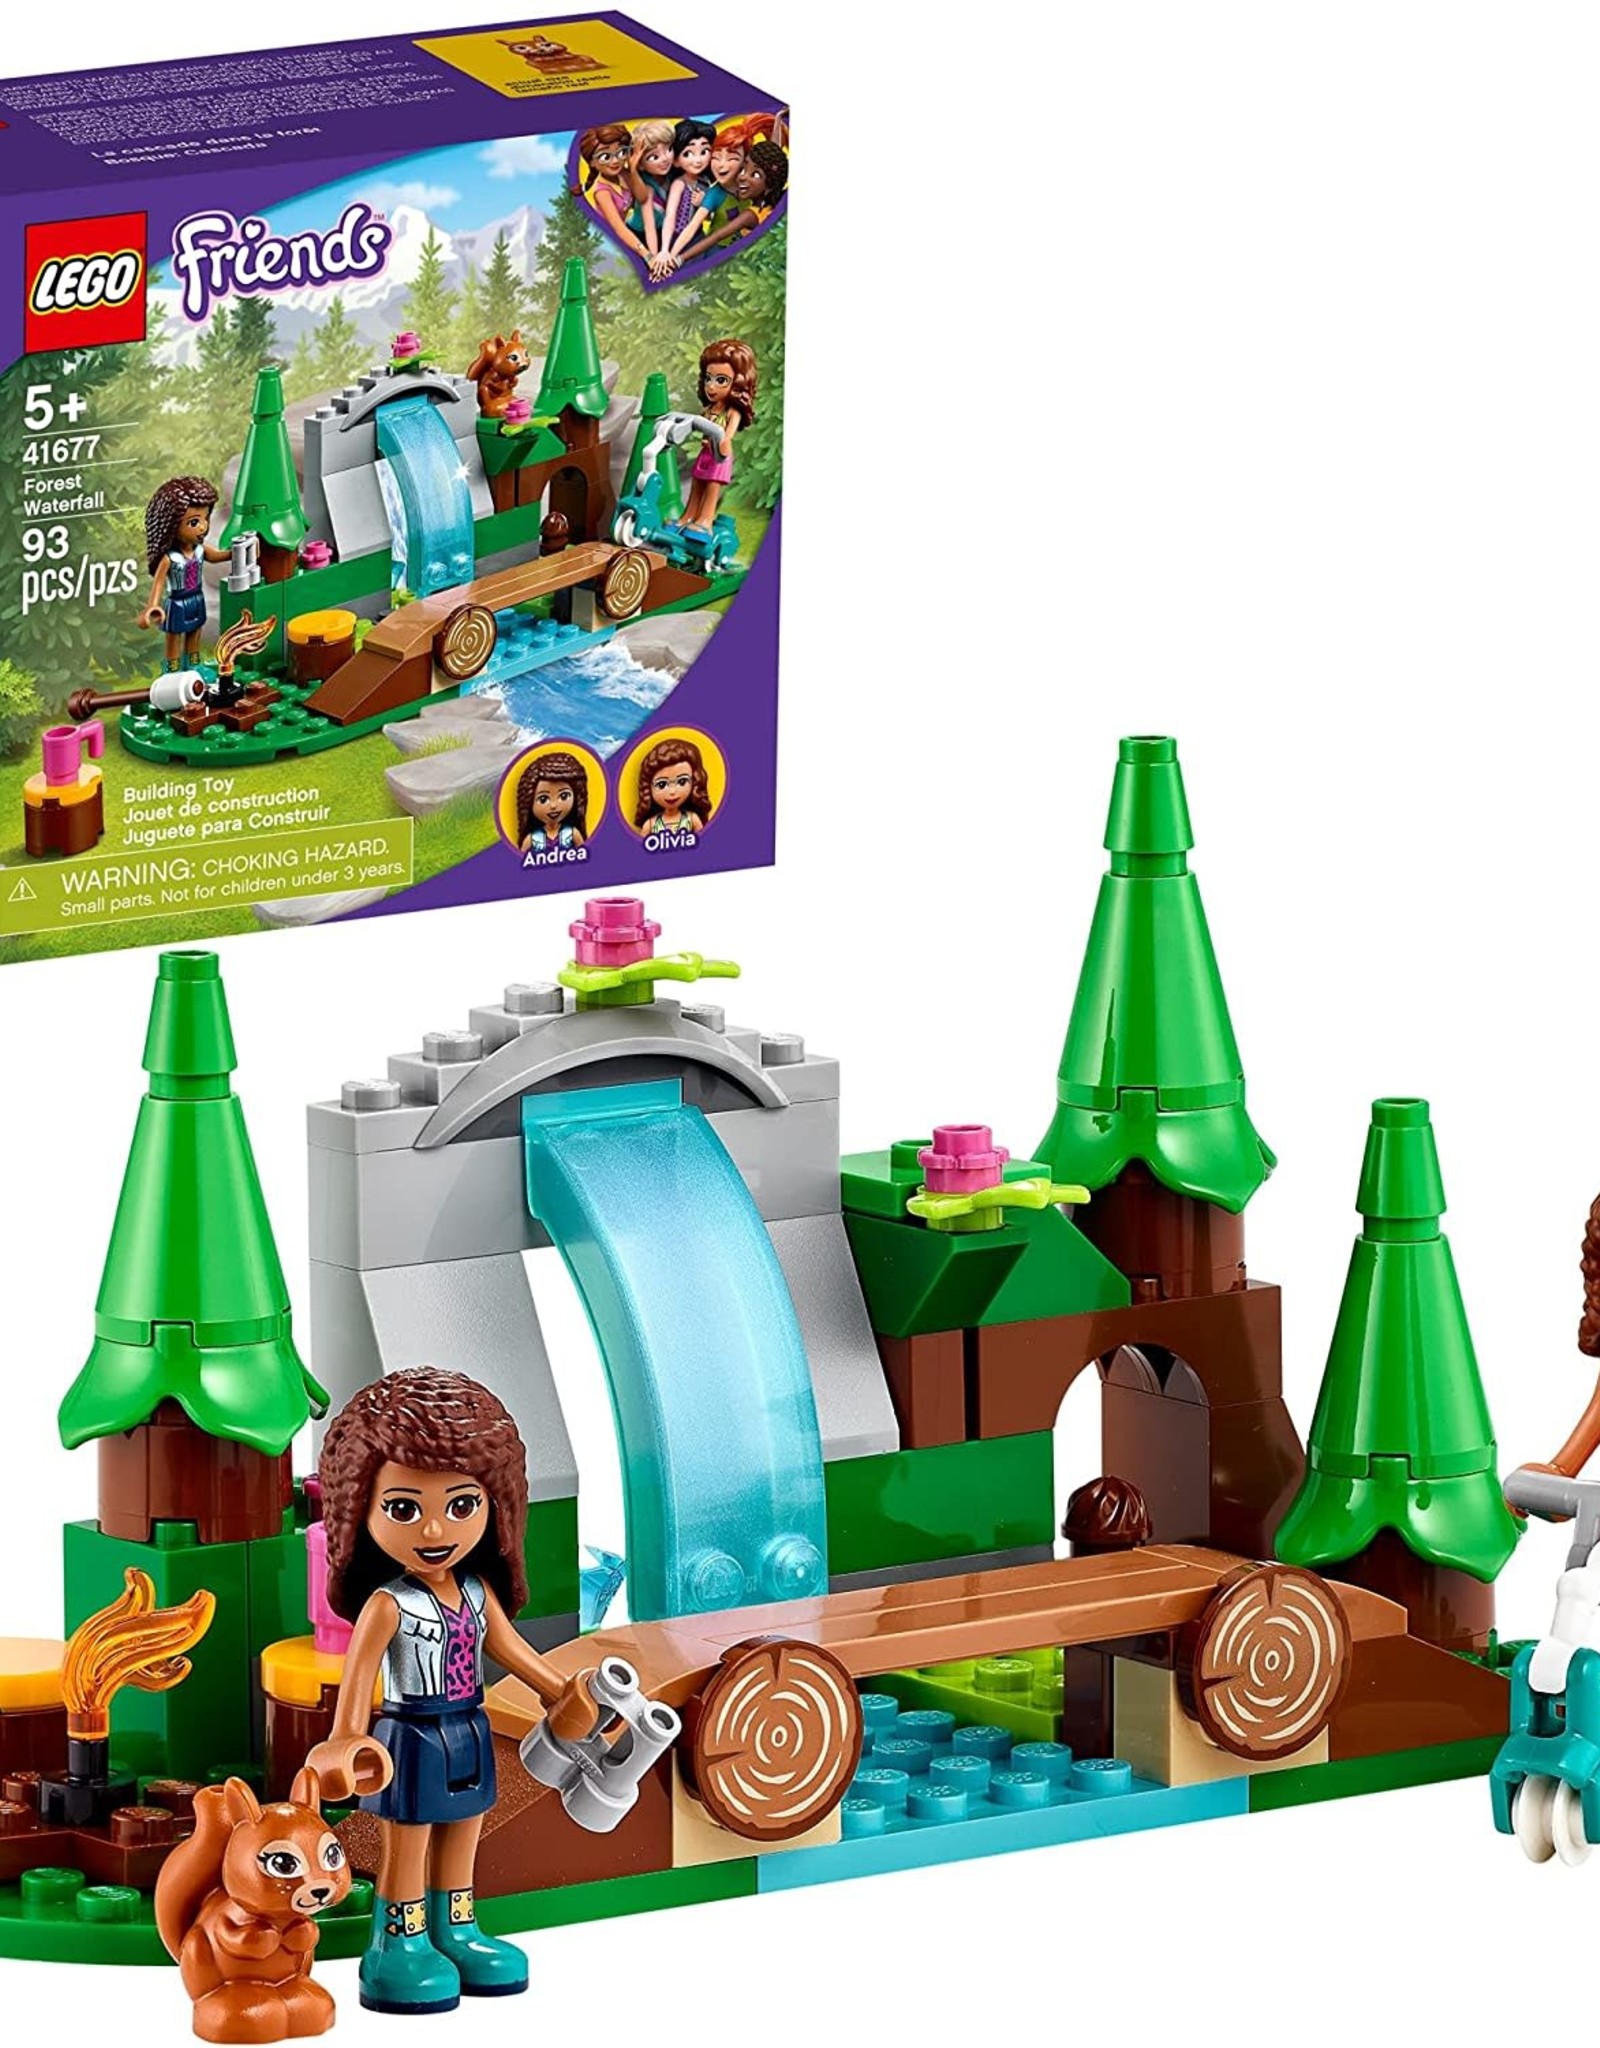 LEGO Lego Friends Forest Waterfall